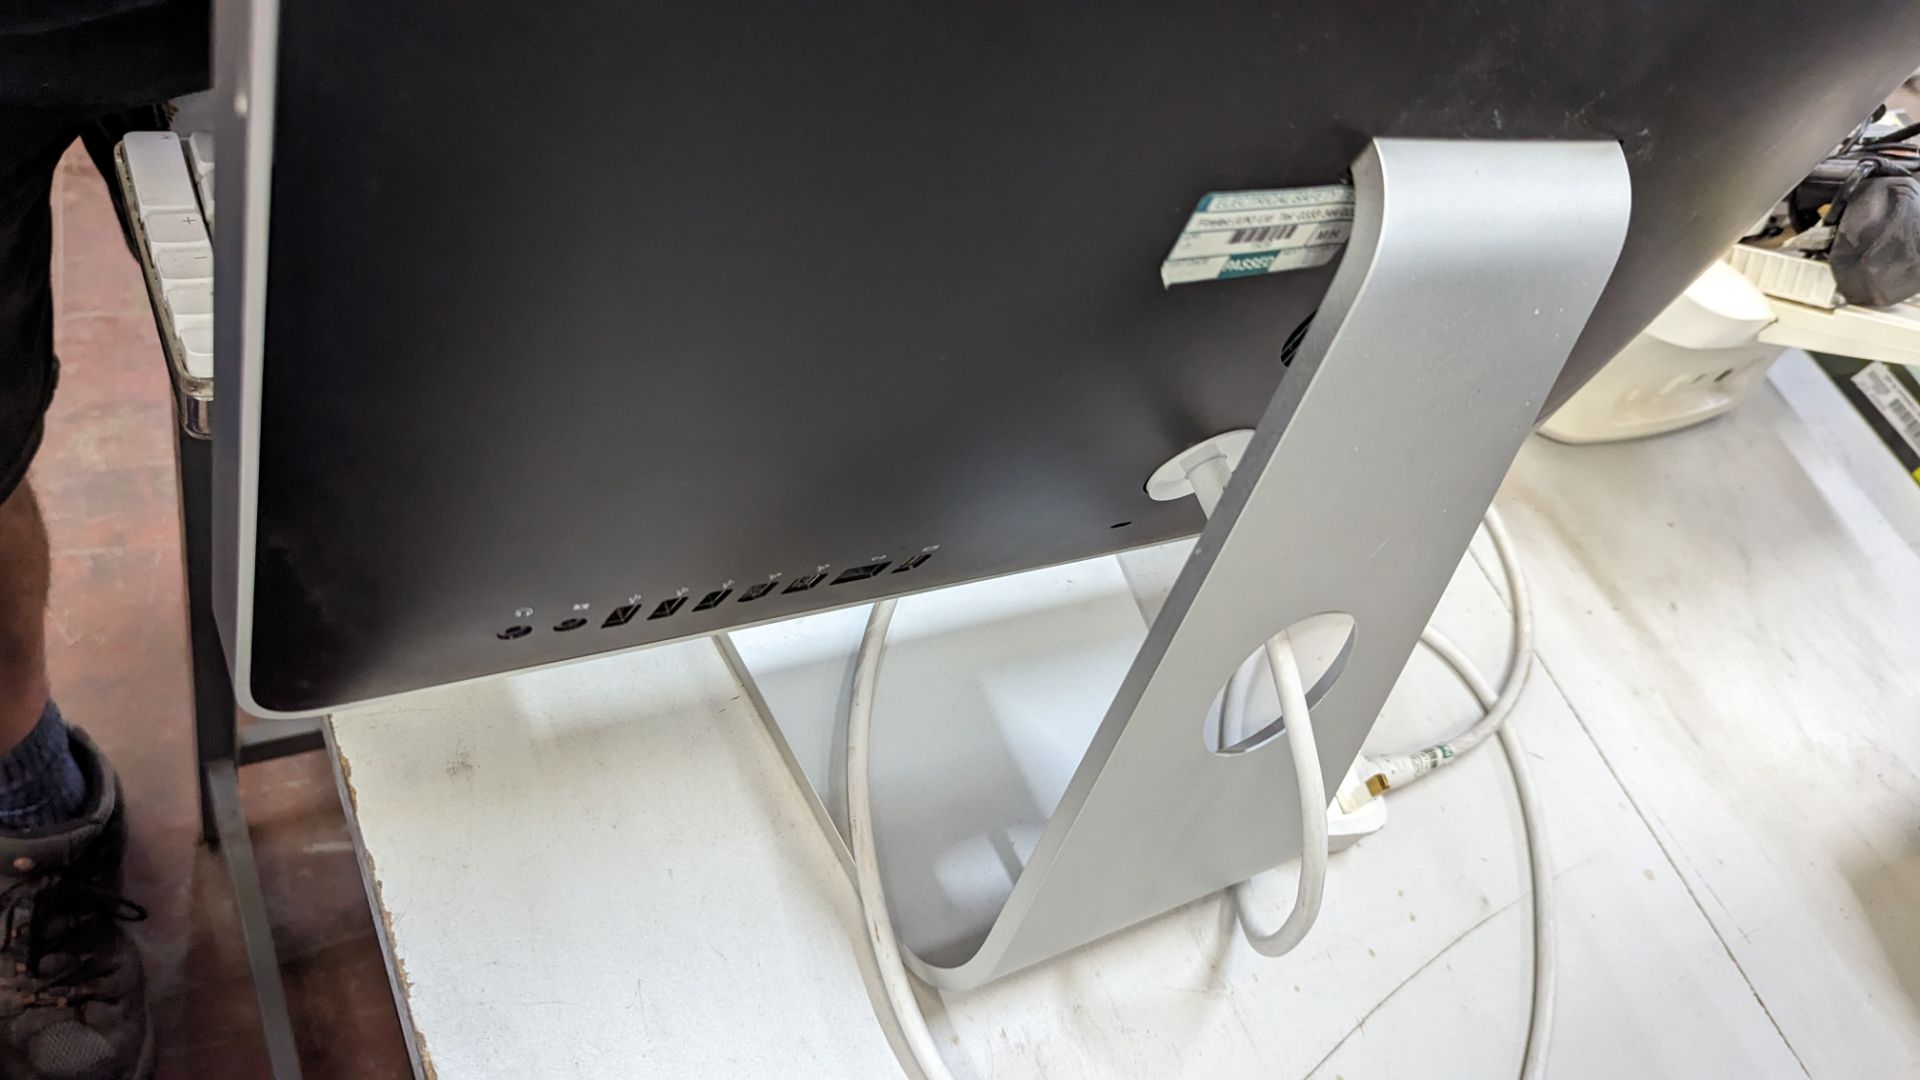 Apple iMac computer model A1224 EMC 2133 including keyboard & mouse - Image 9 of 9